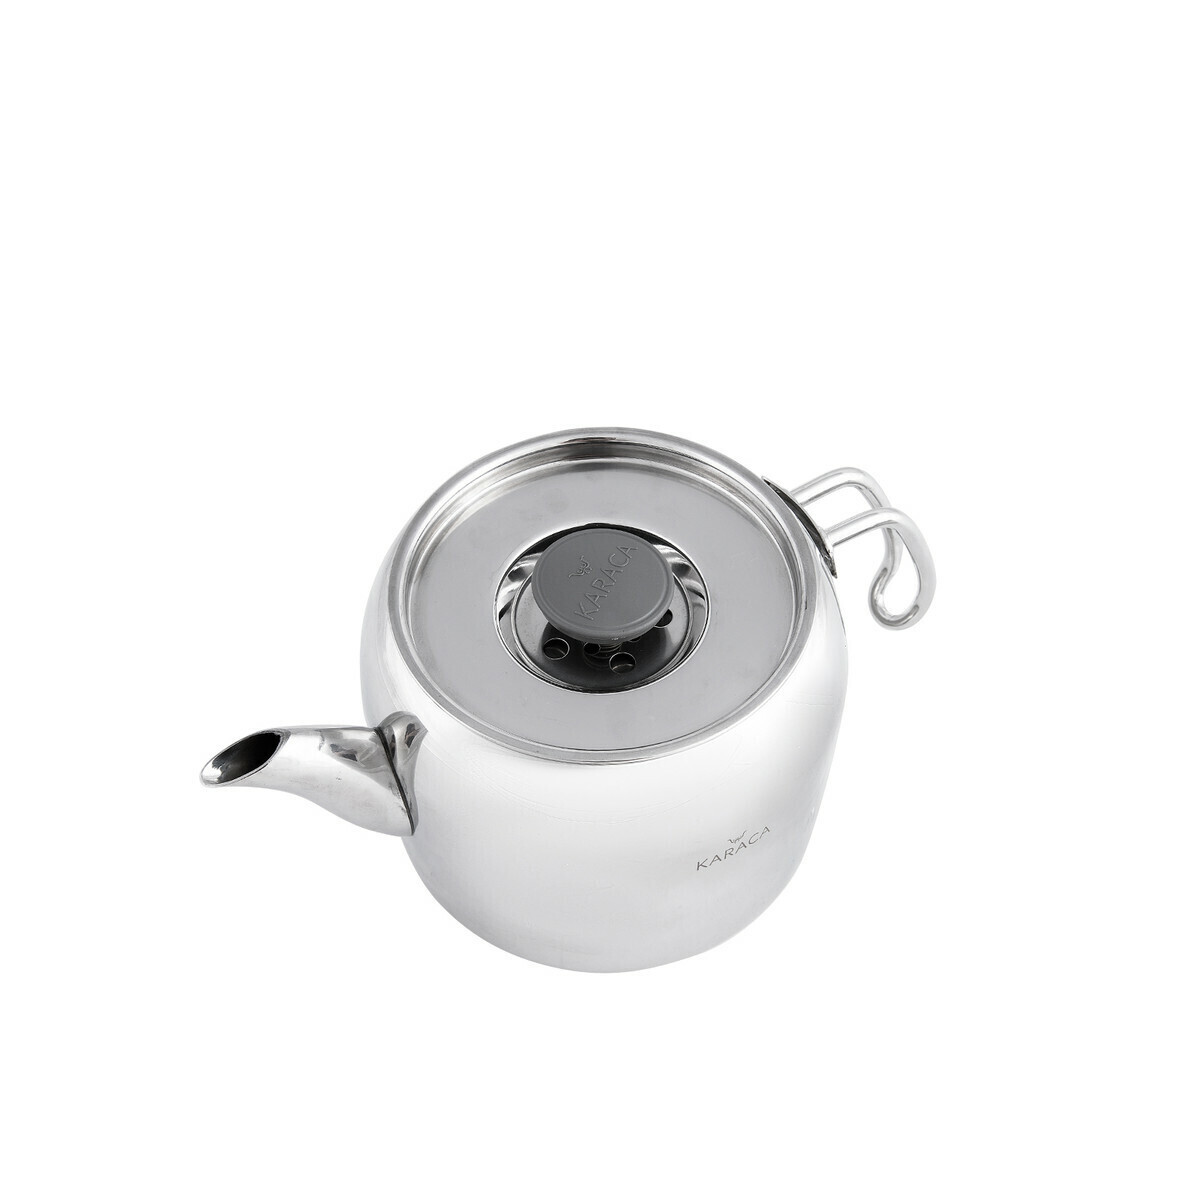 KARACA Likya Tea Pot - Teapots - Caydanlik Small